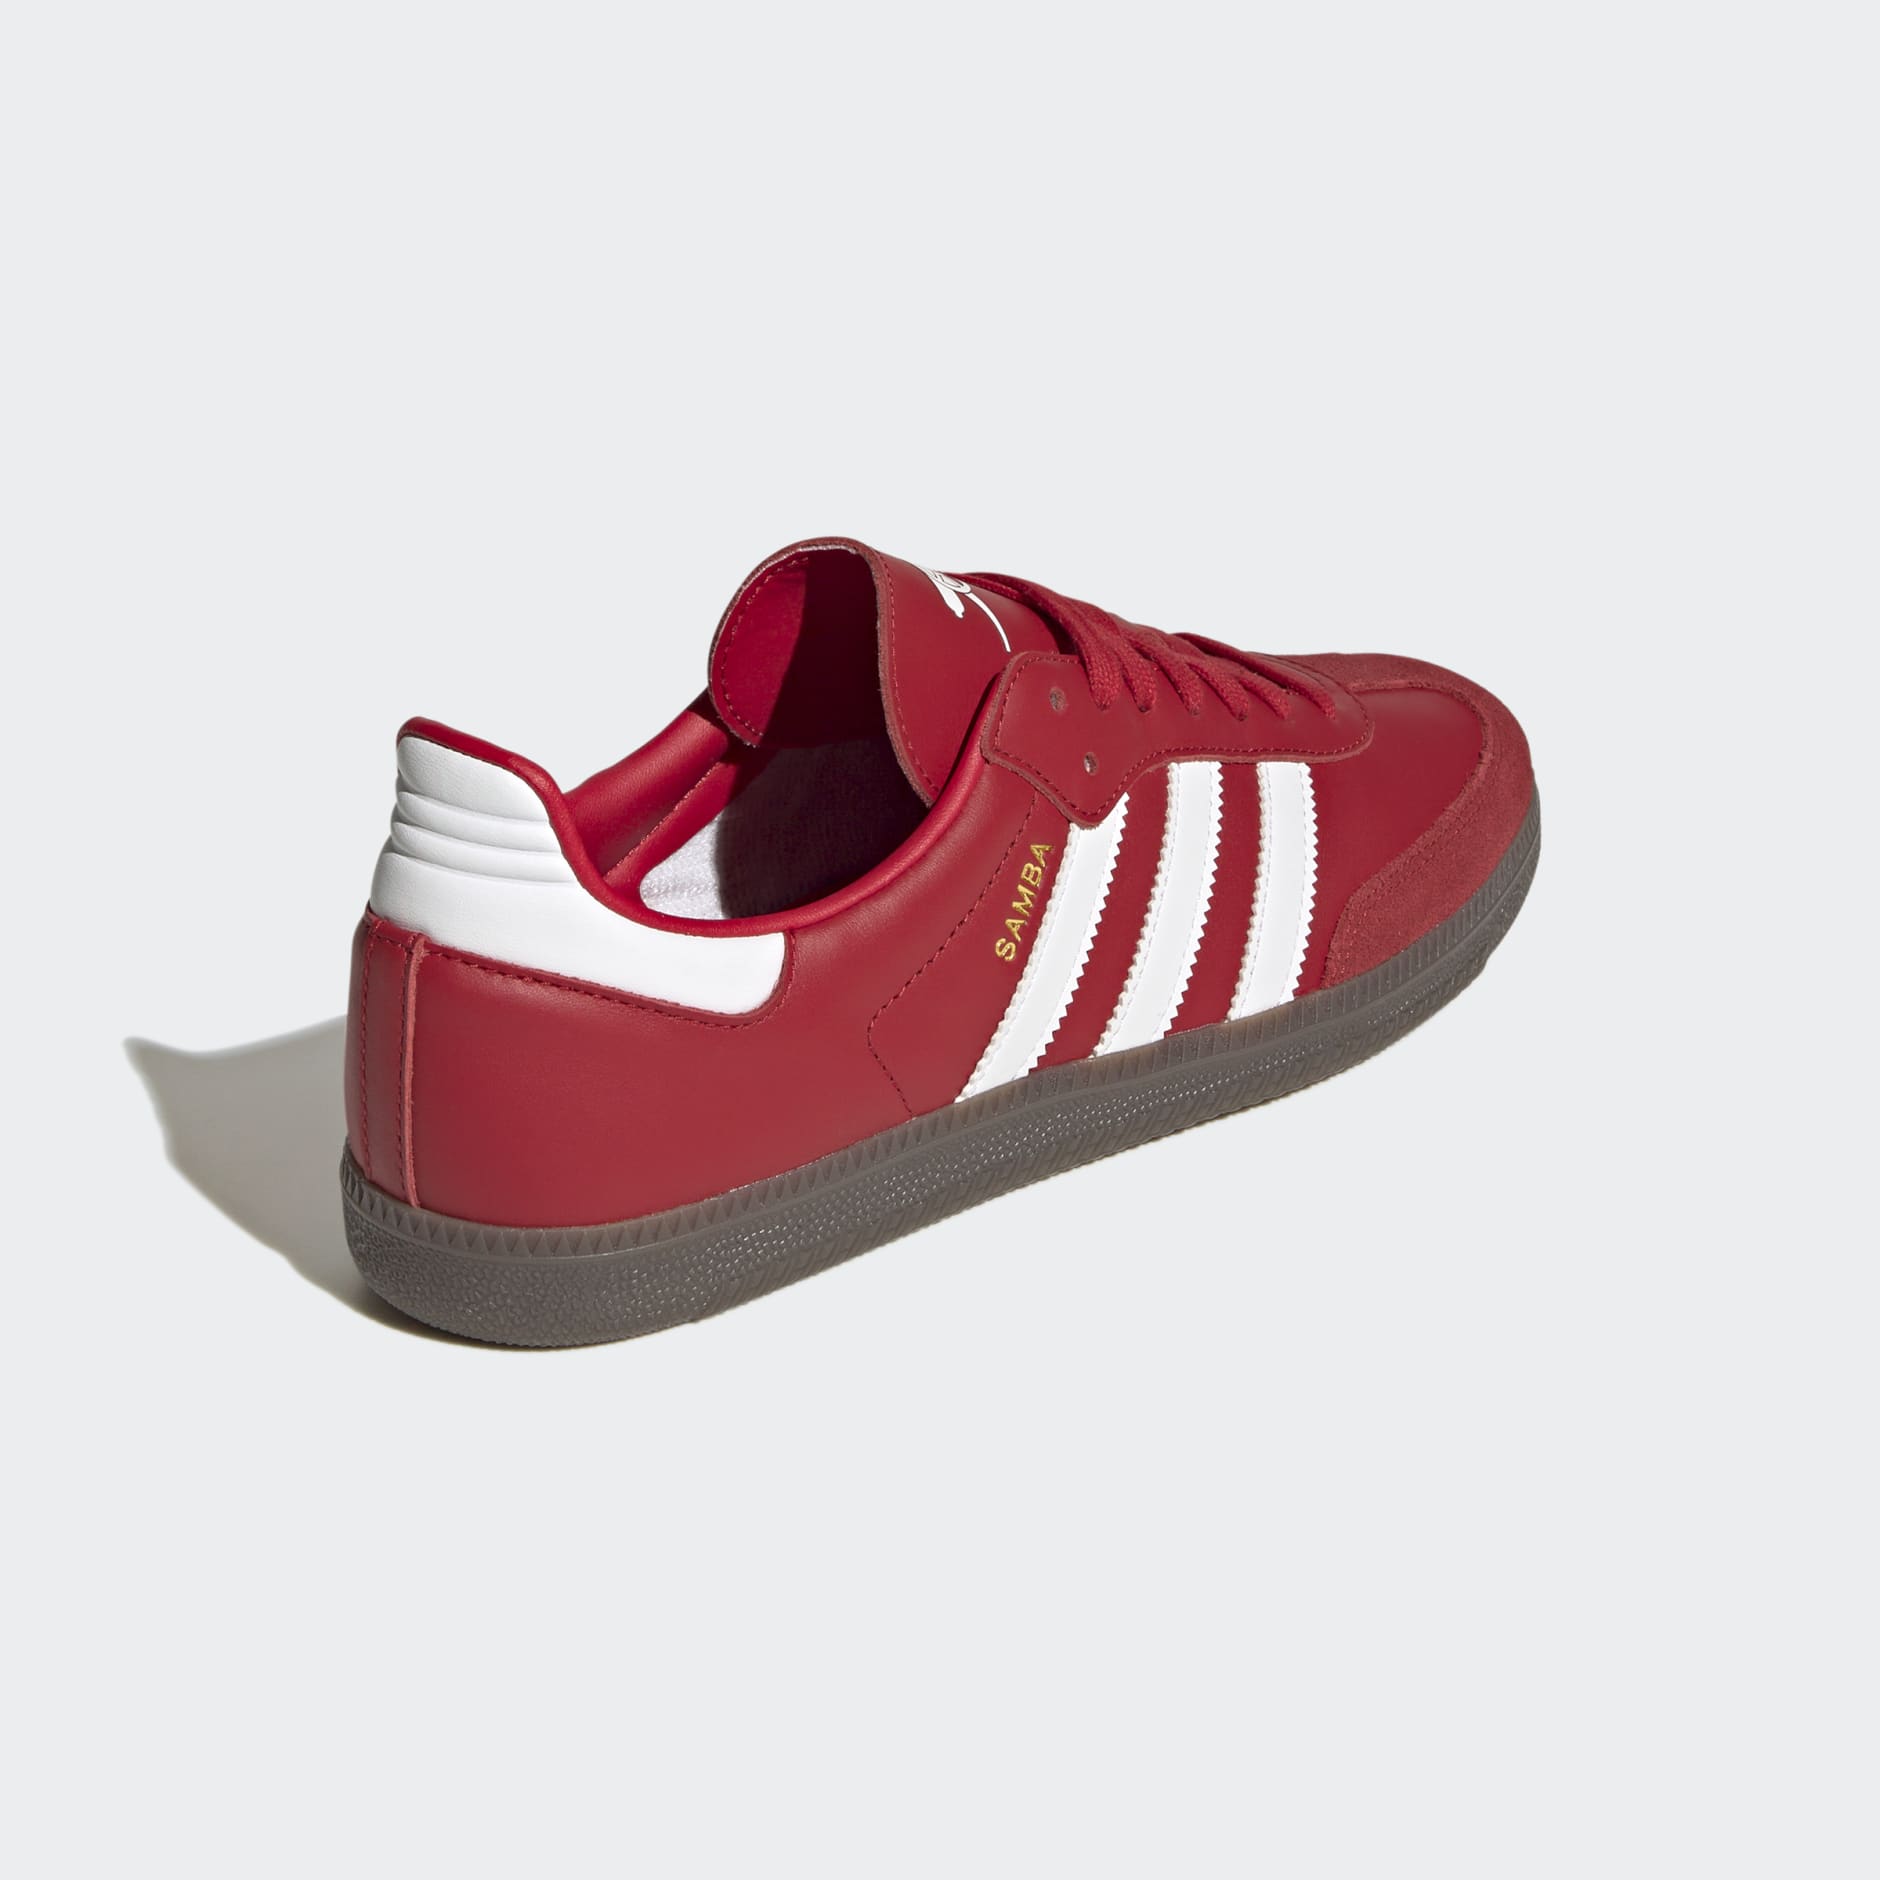 adidas Originals Gazelle sneakers in red s76228 | ASOS